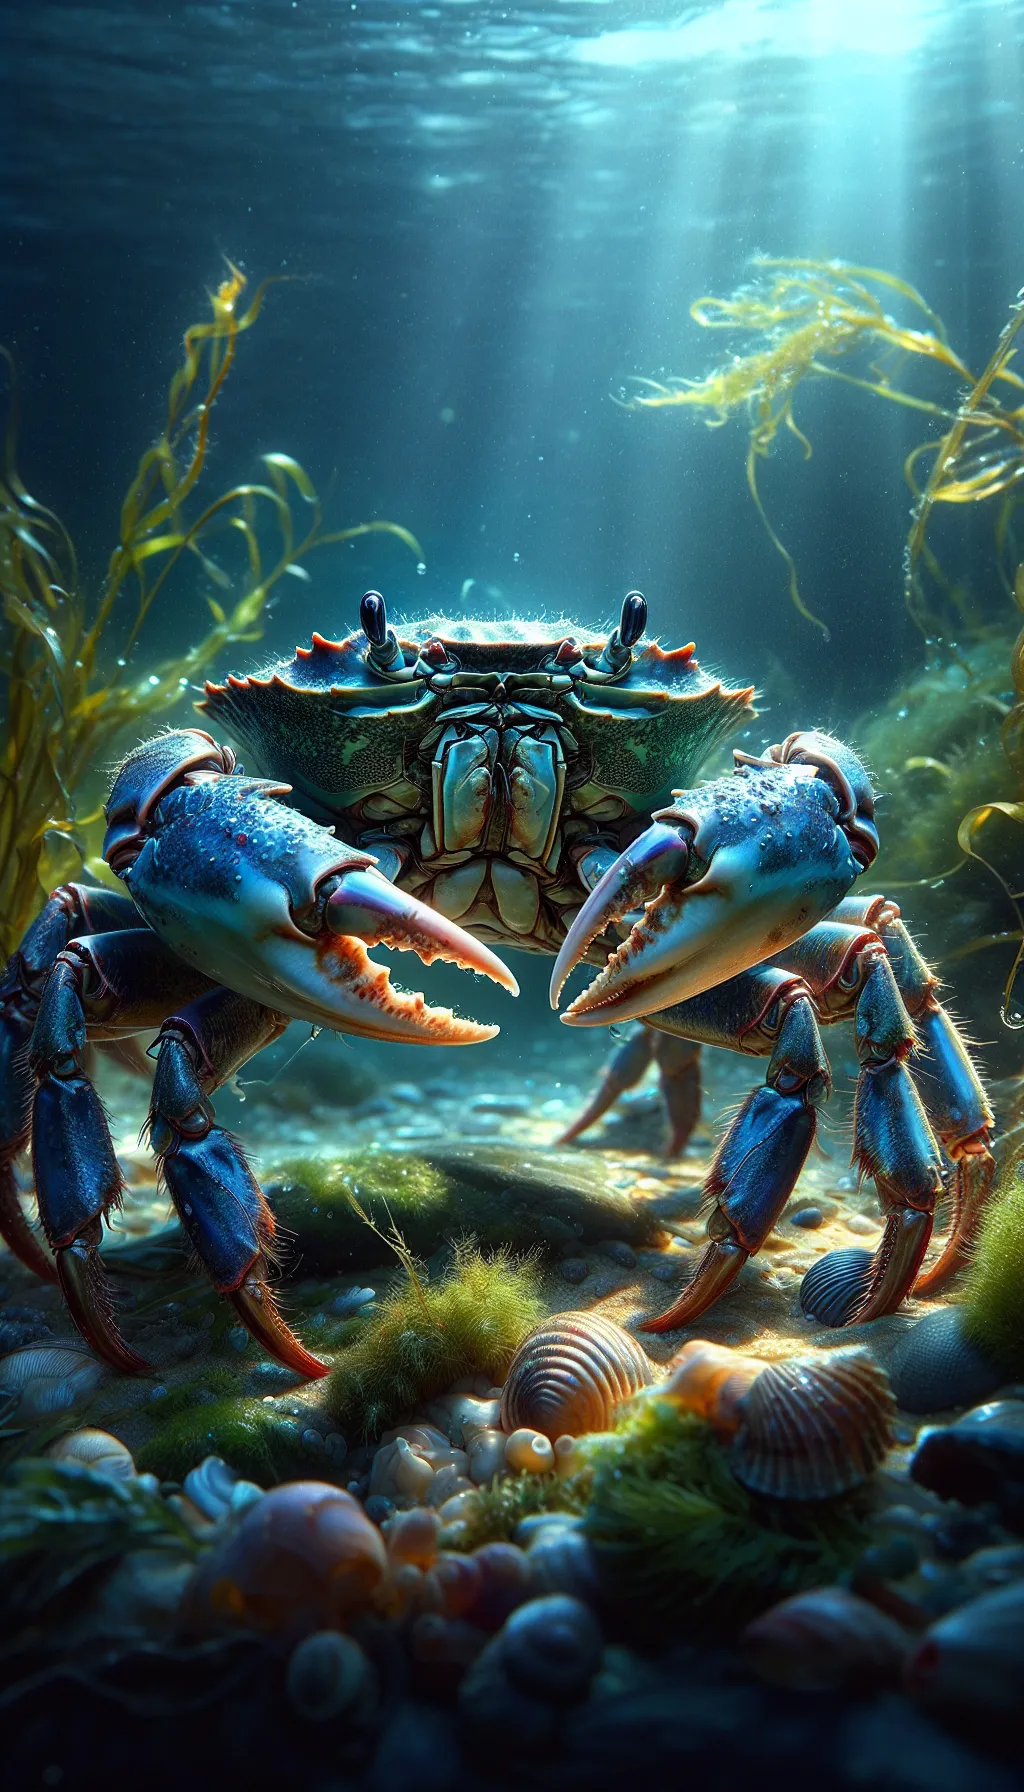 Crab - Animal Matchup